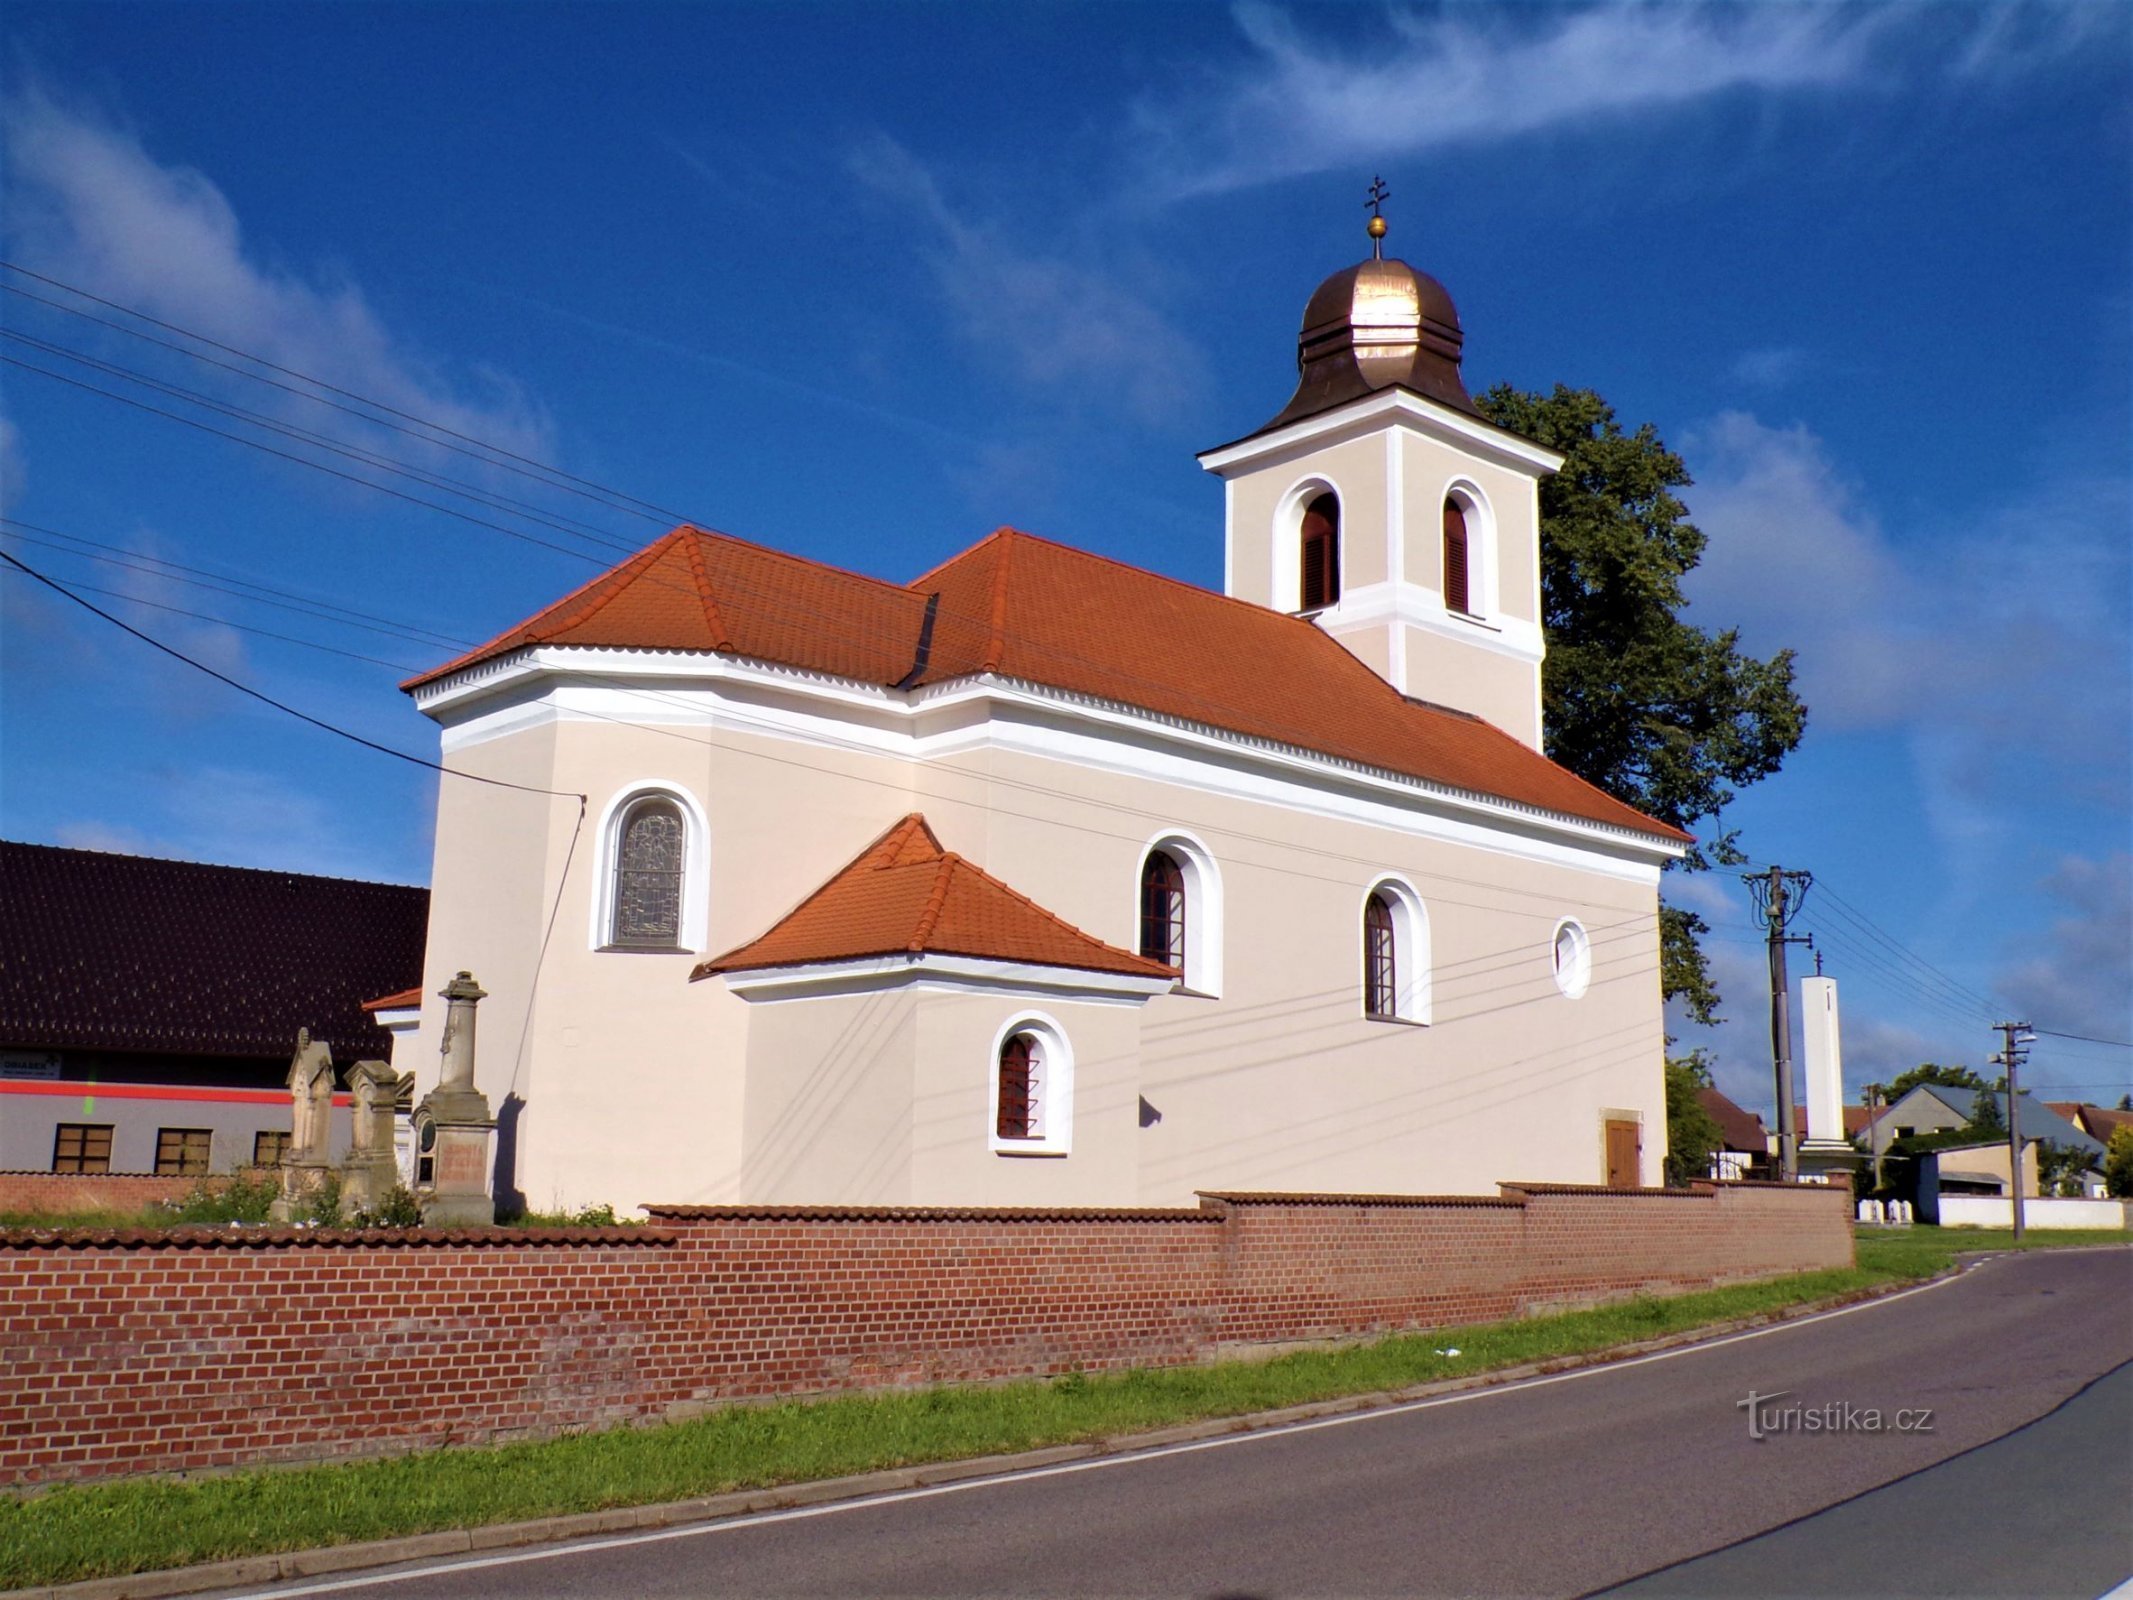 Nhà thờ Chúa Ba Ngôi (Praskačka, 9.8.2021/XNUMX/XNUMX)